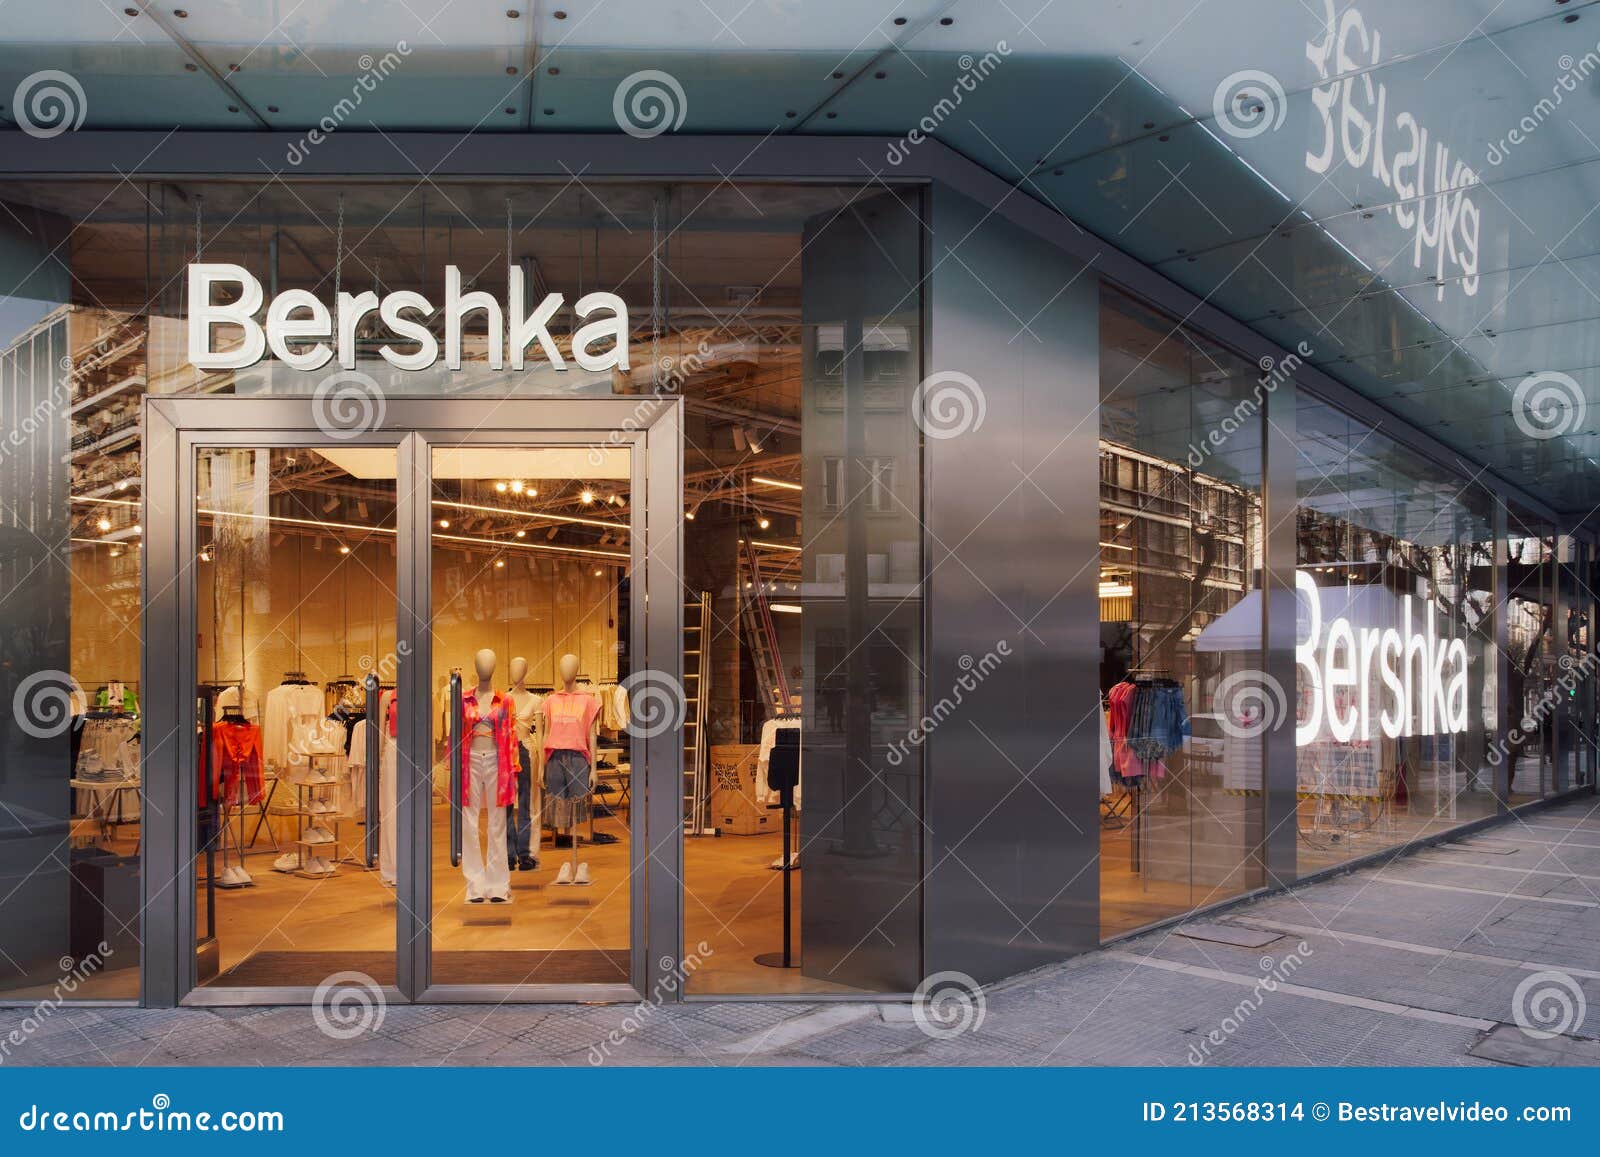 Bershka Retailer Store Exterior with Logo. Editorial Stock Image ...